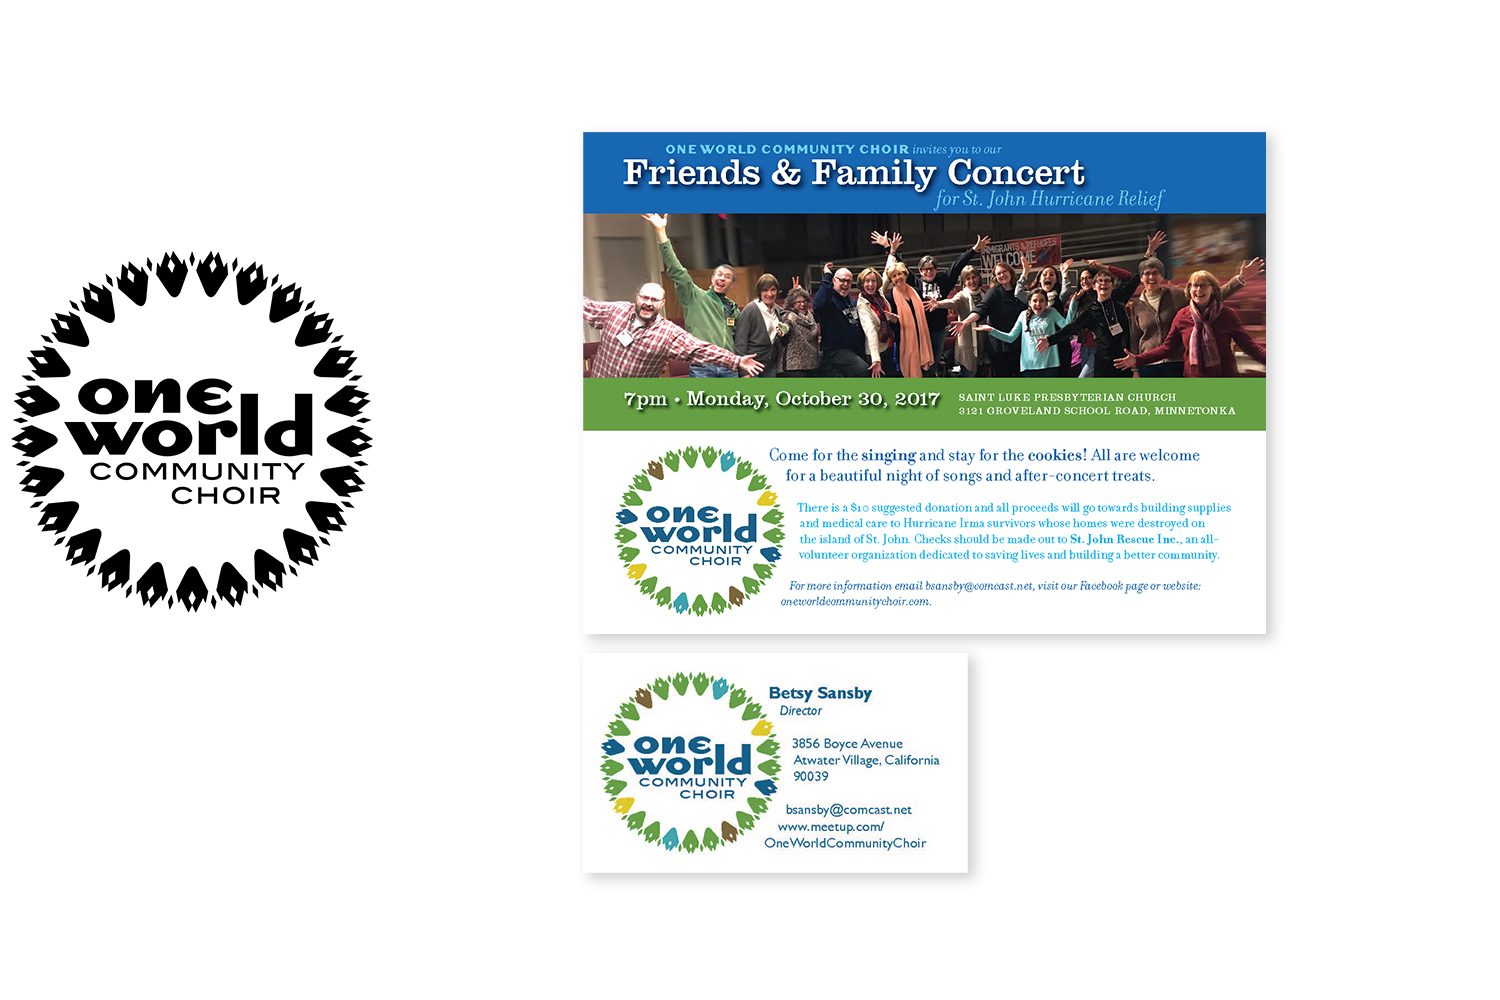  One World Community Choir: business card and postcard 